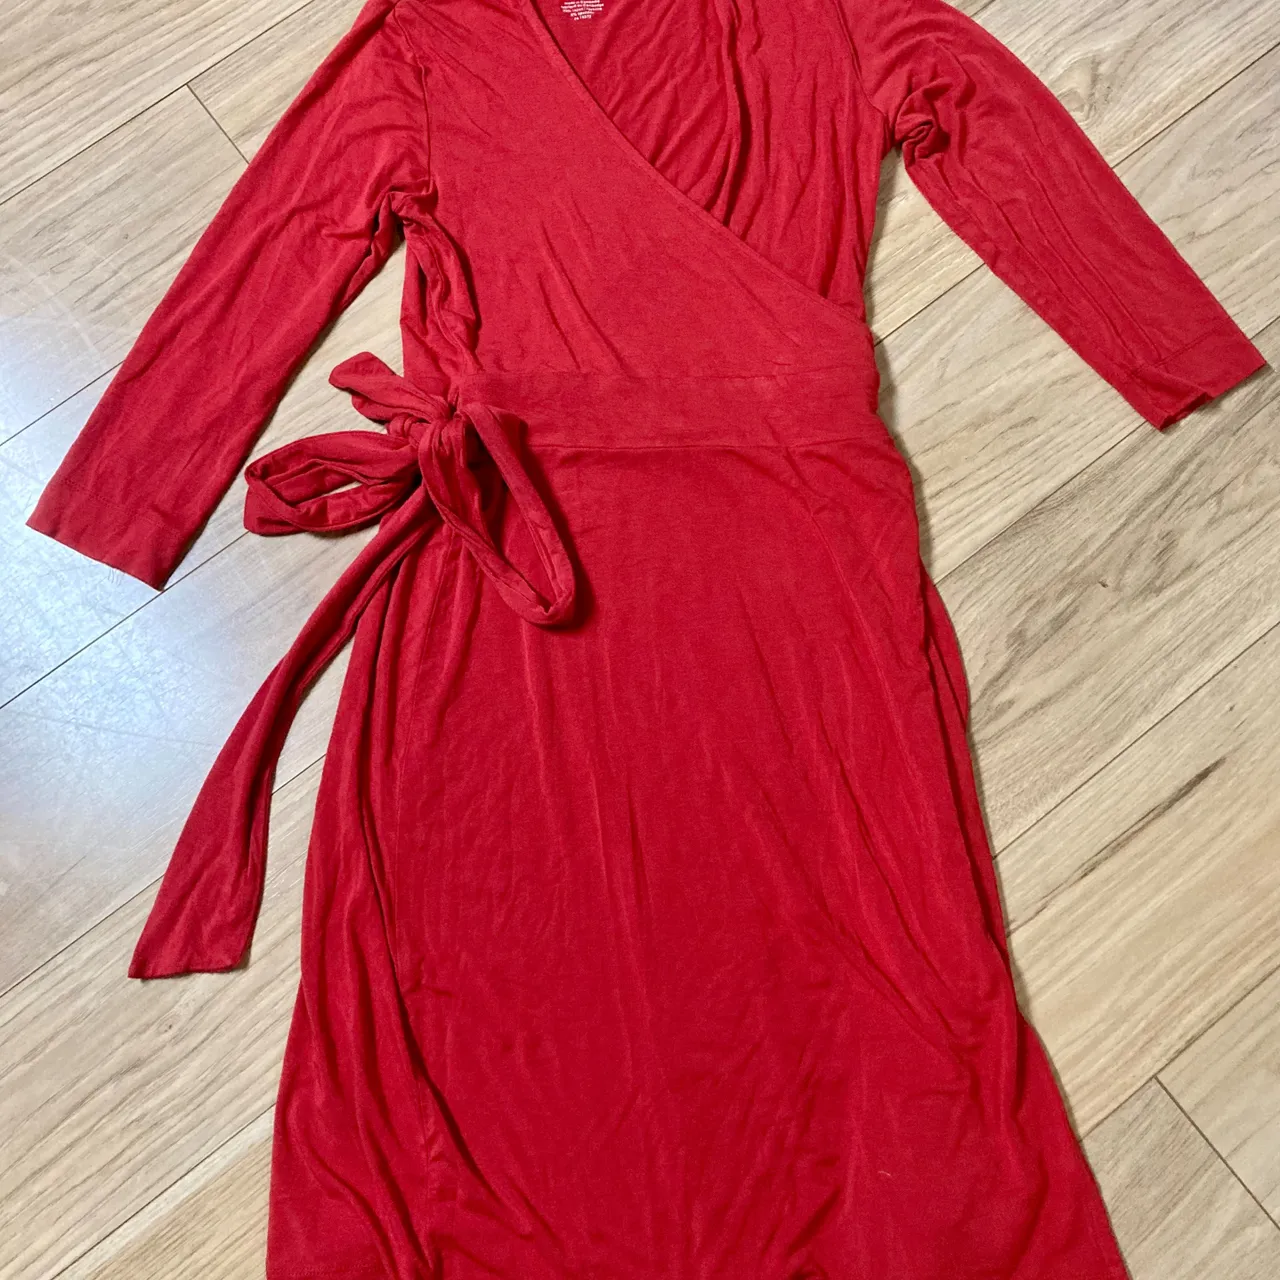 Joe fresh red dress wrap around style size small photo 1